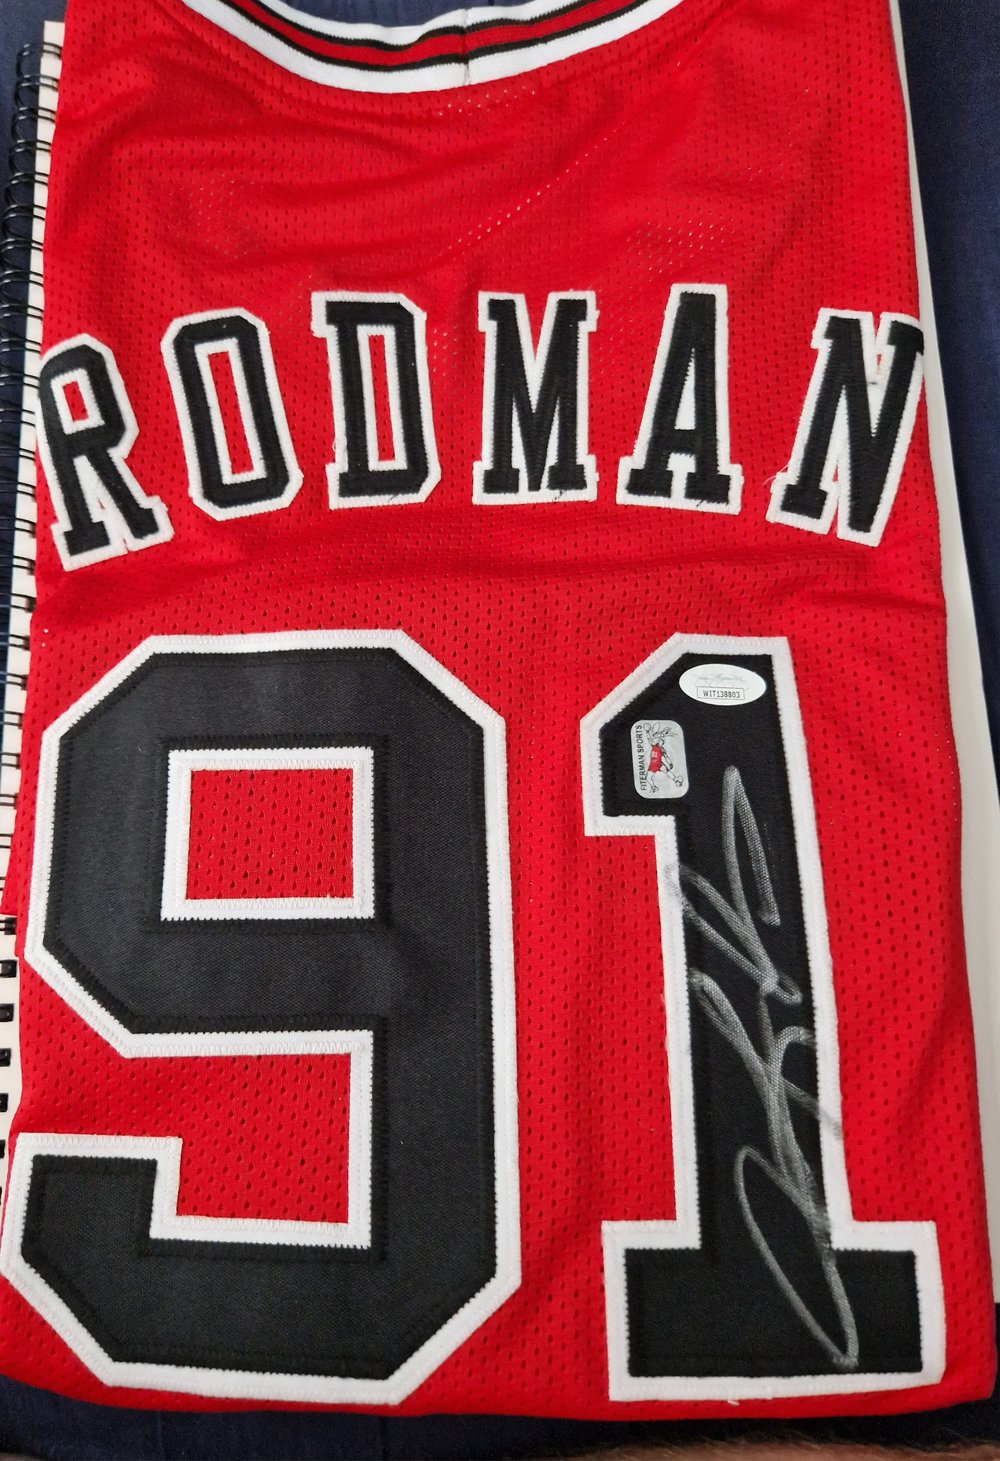 Dennis Rodman Signed Jersey JSA